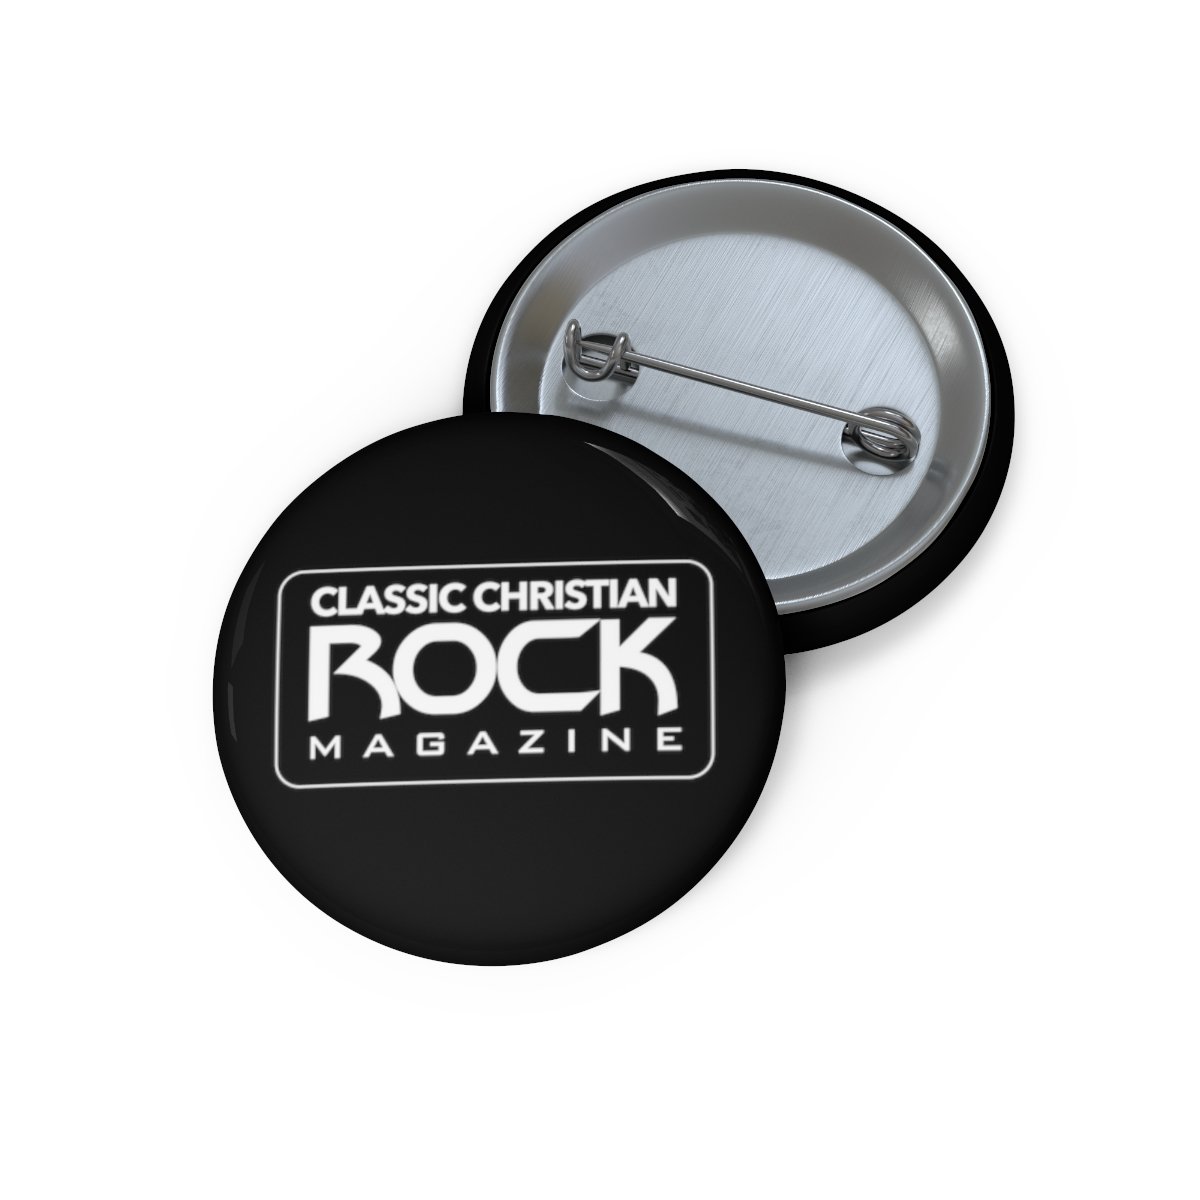 Classic Christian Rock Magazine Pin Buttons